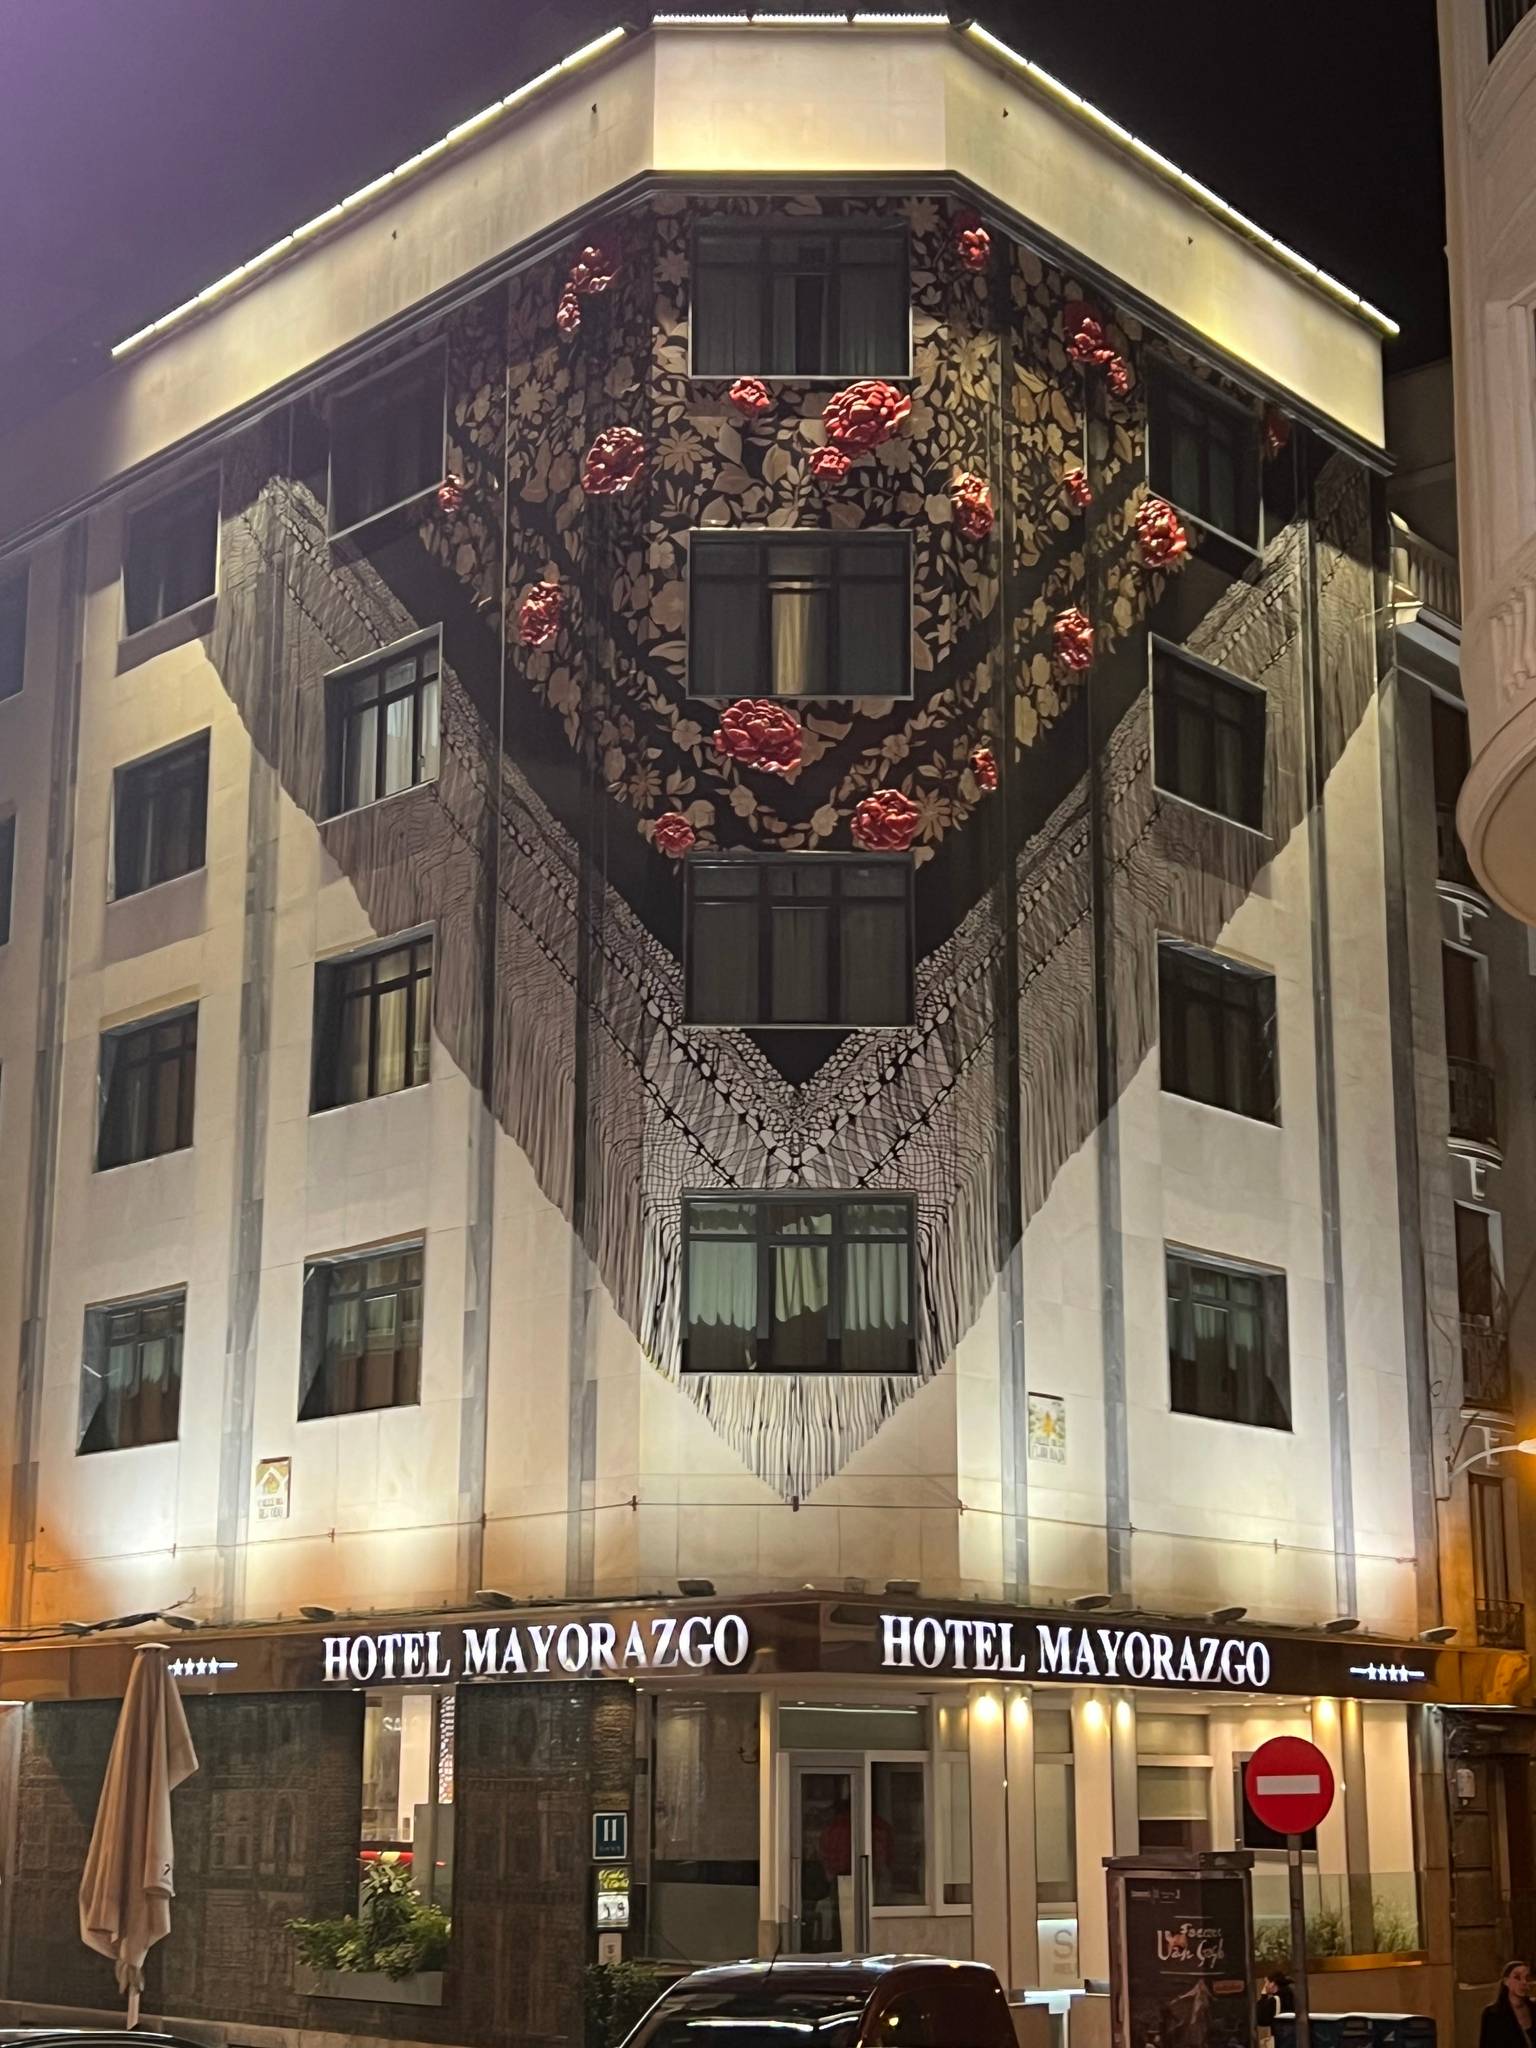 Unknown - Madrid&mdash;Hotel Mayograzgo Mural